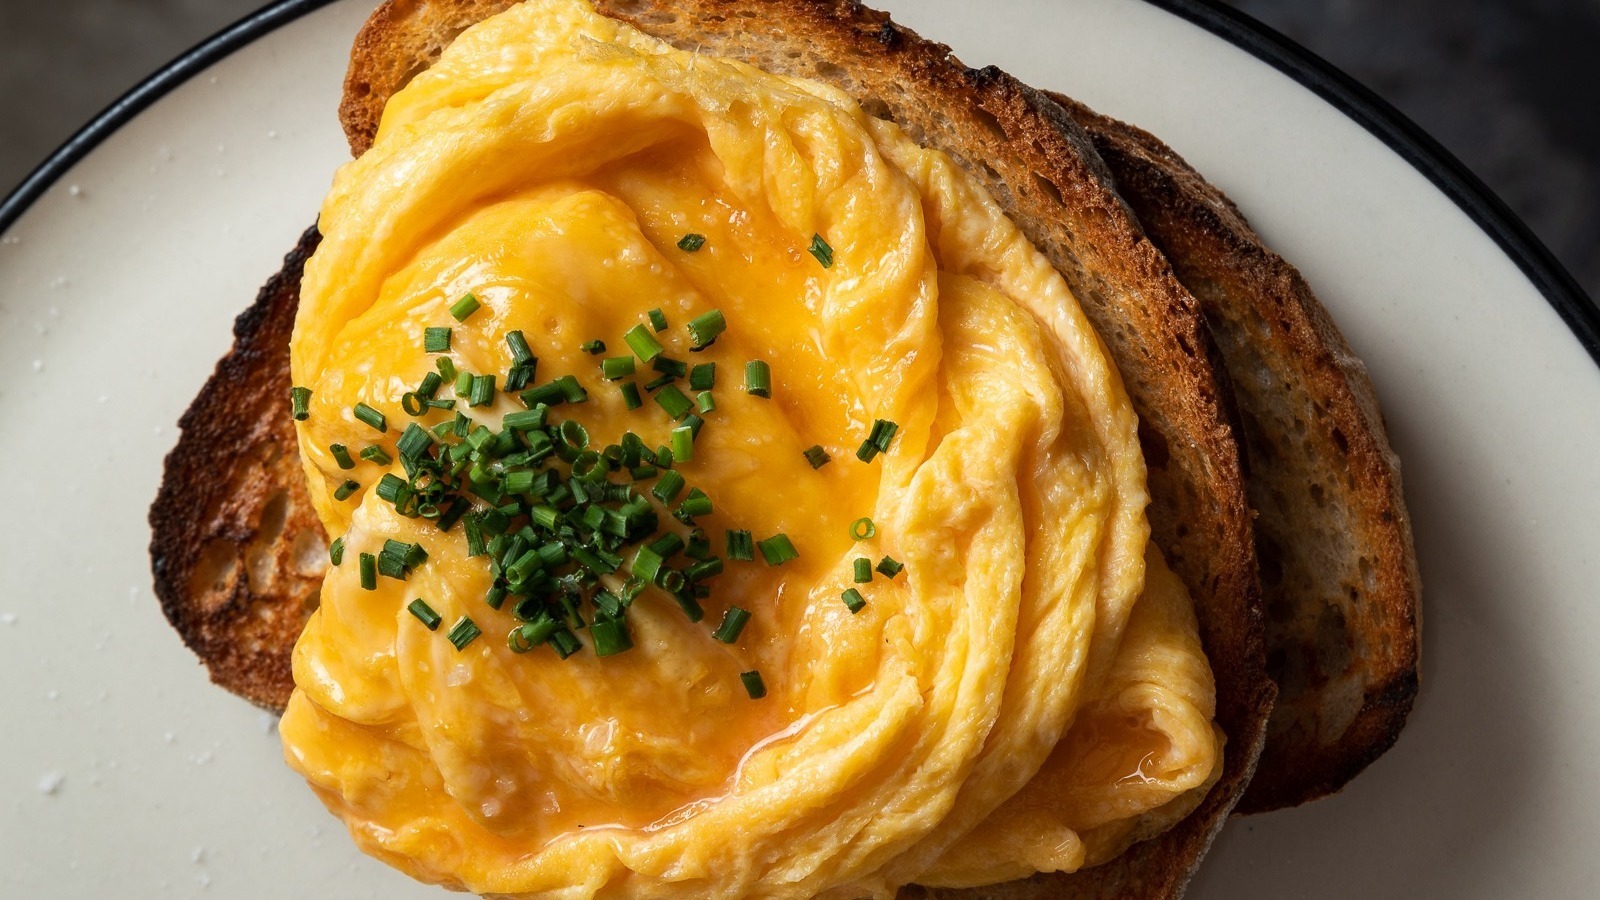 How to make scrambled eggs - The Washington Post